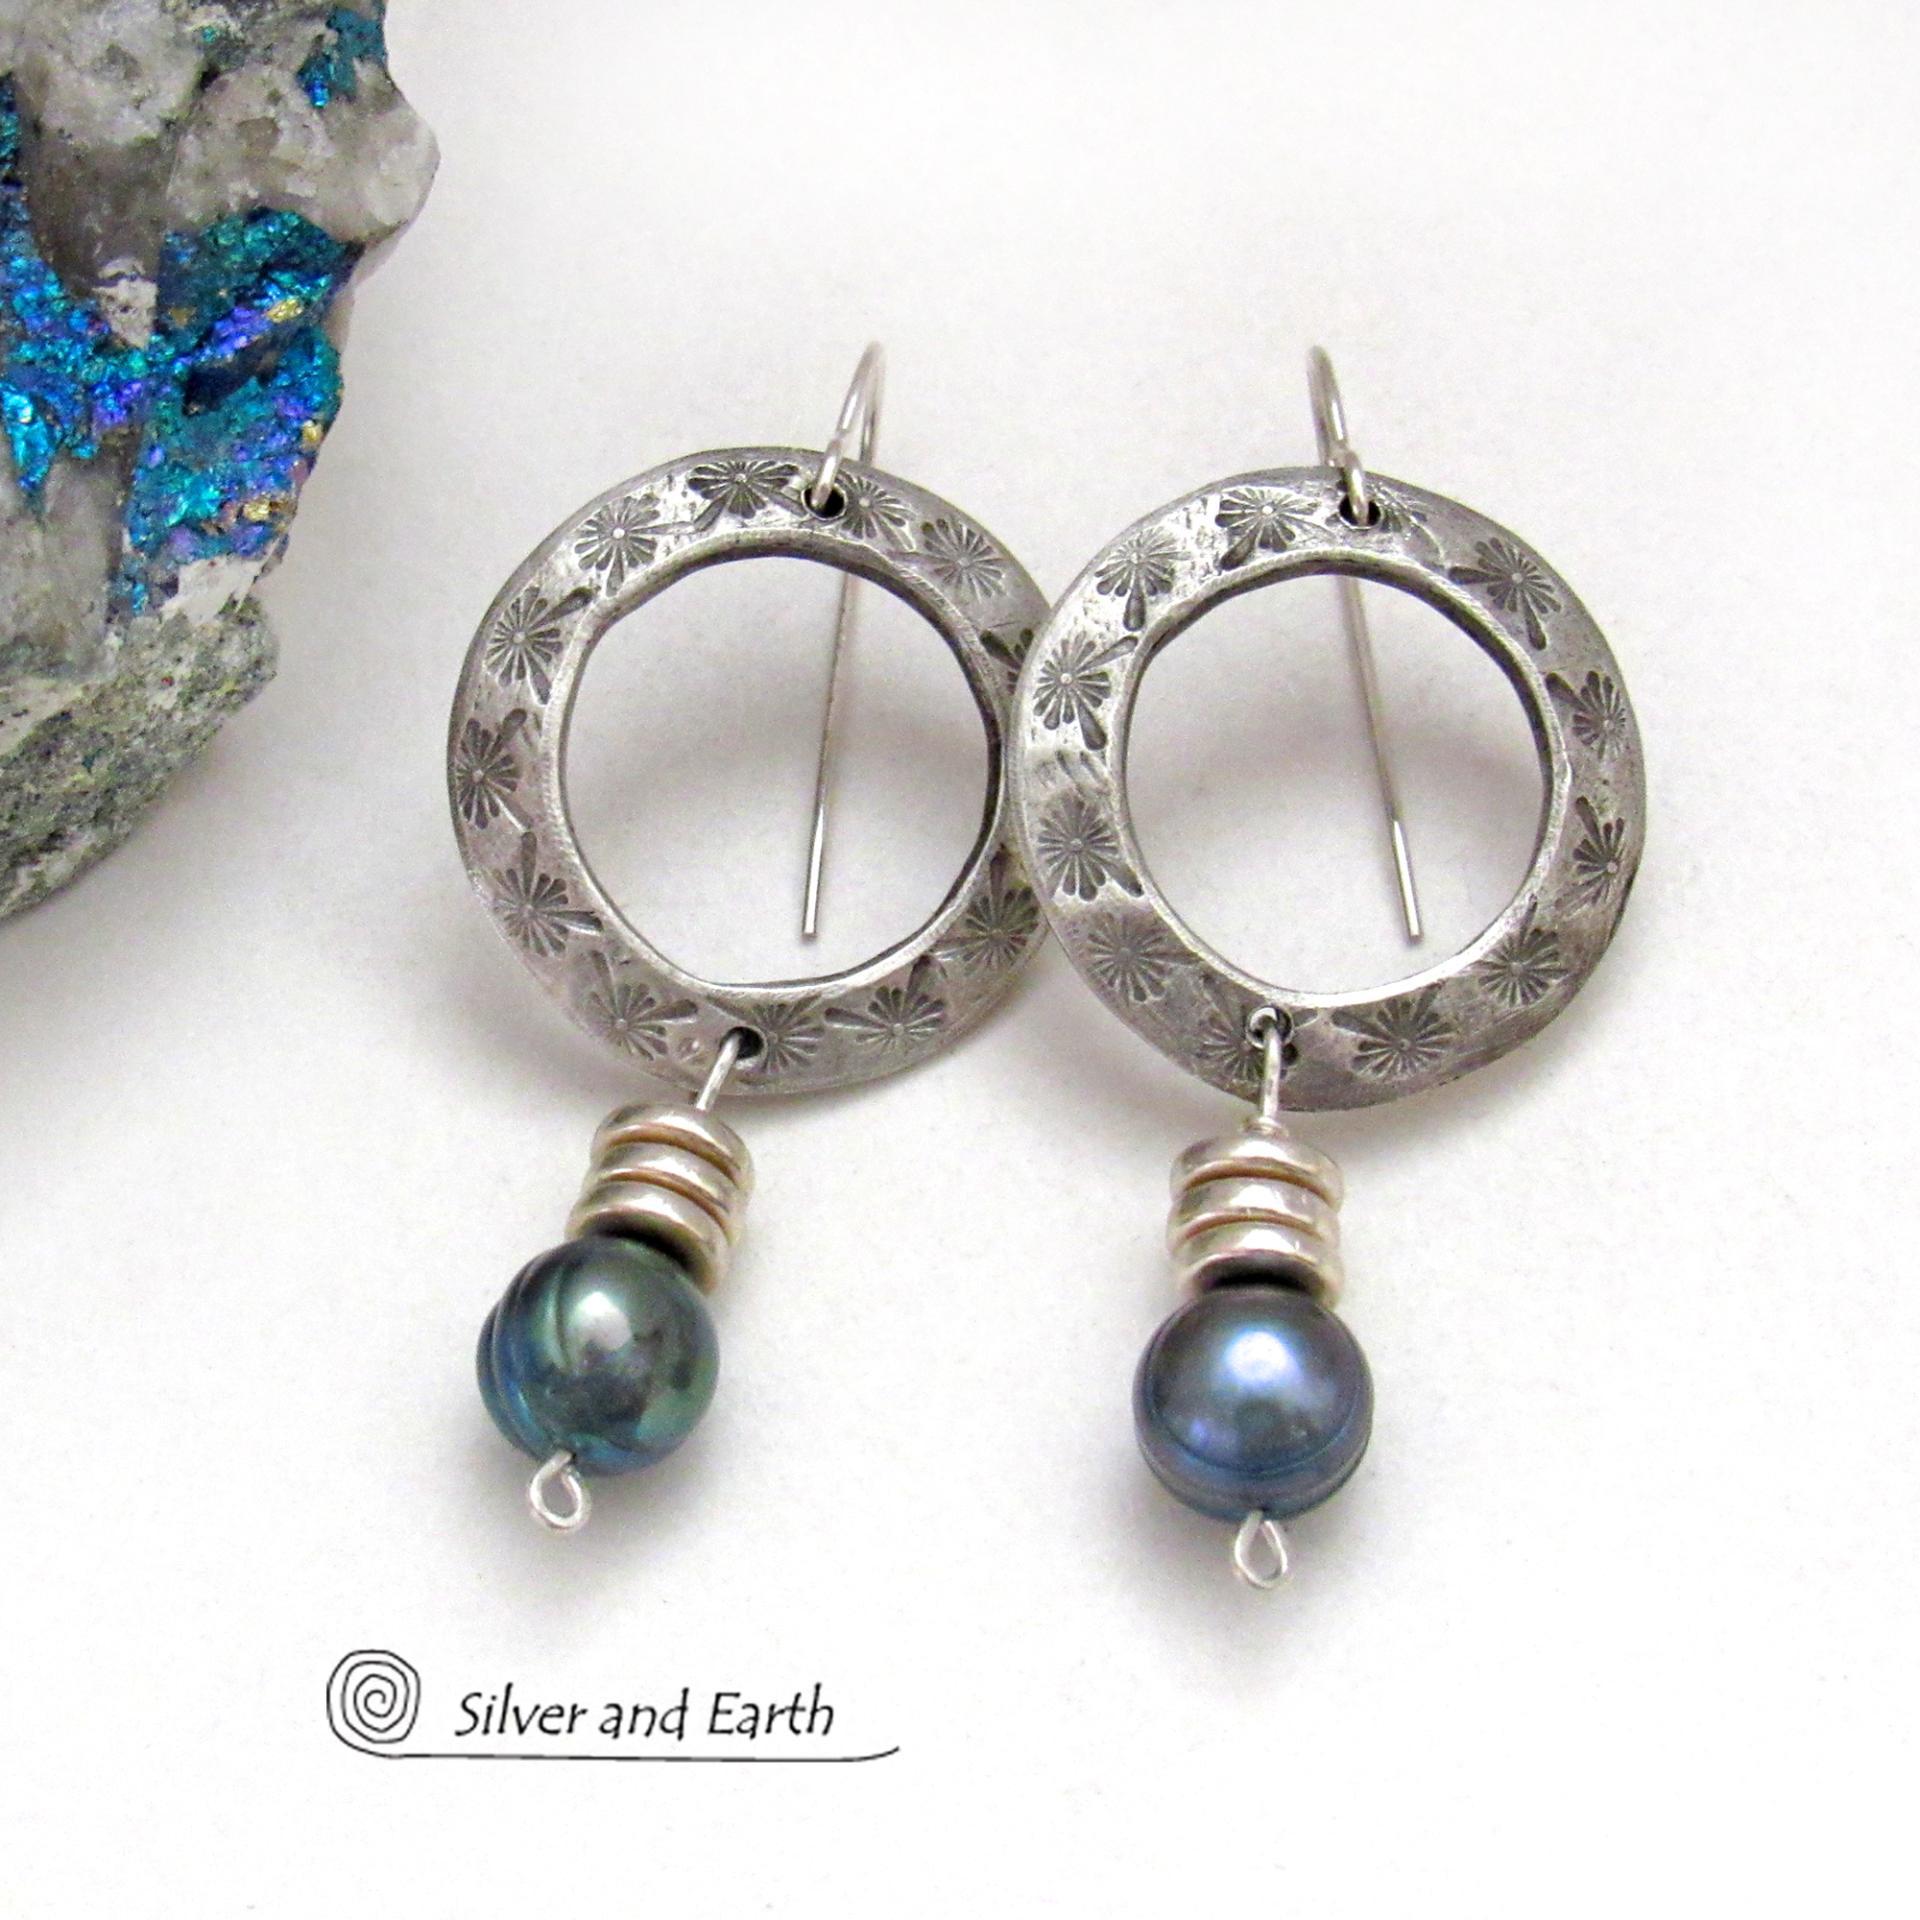 Silver Pewter Circle Hoop Earrings with Blue Pearl Dangles - Modern Elegant Chic Freshwater Pearl Jewelry